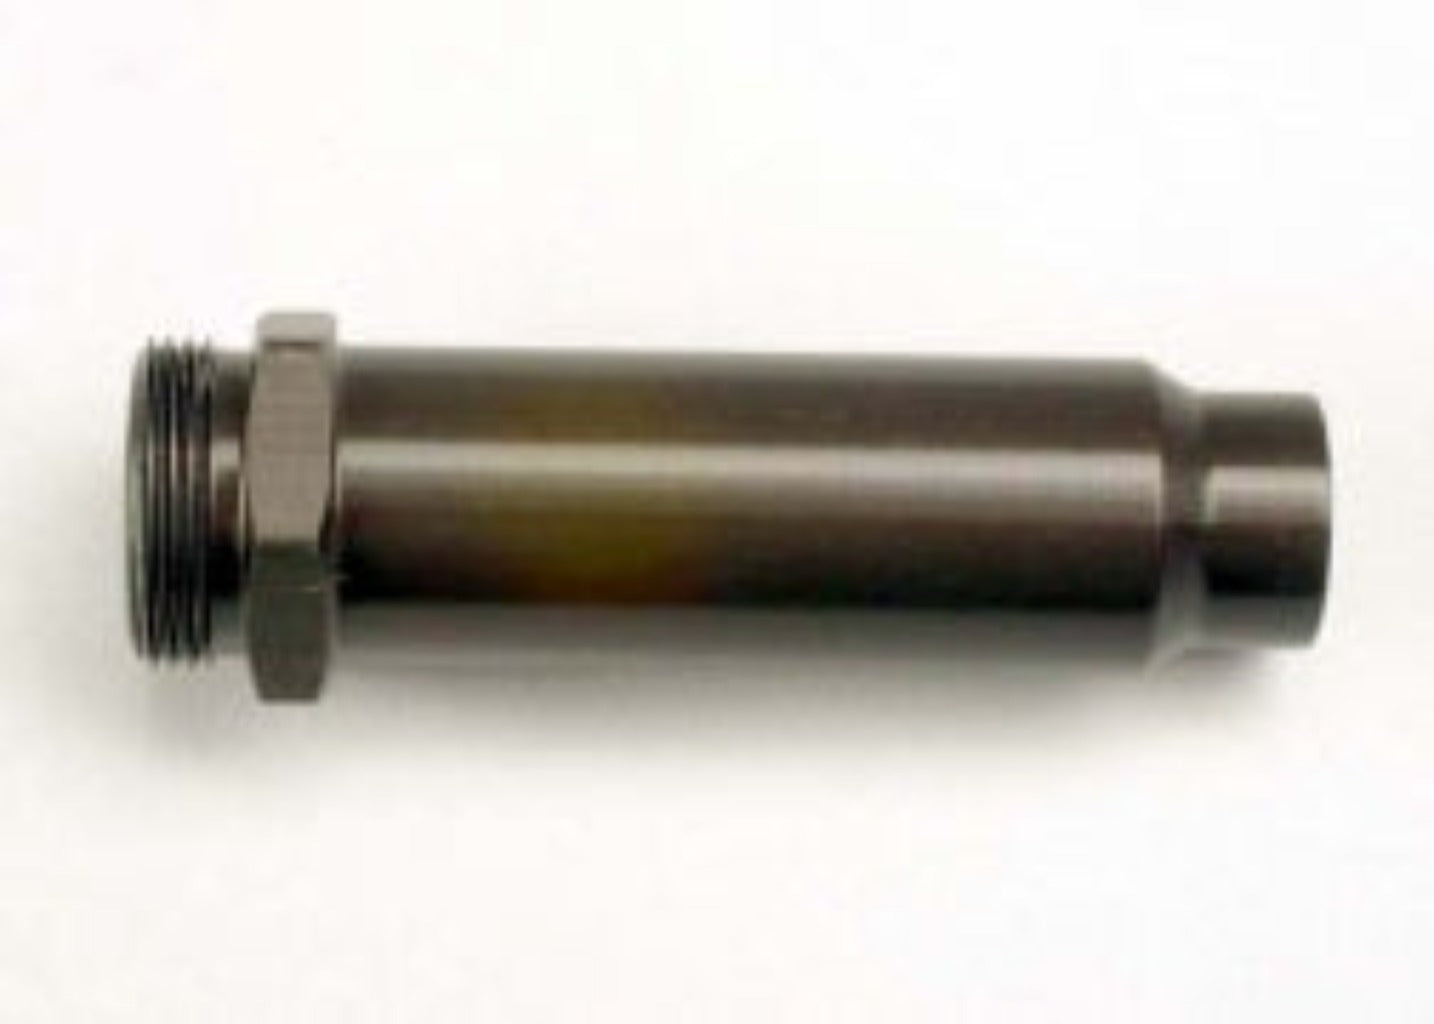 2666 Big Bore shock cylinder (XX-long) (1)